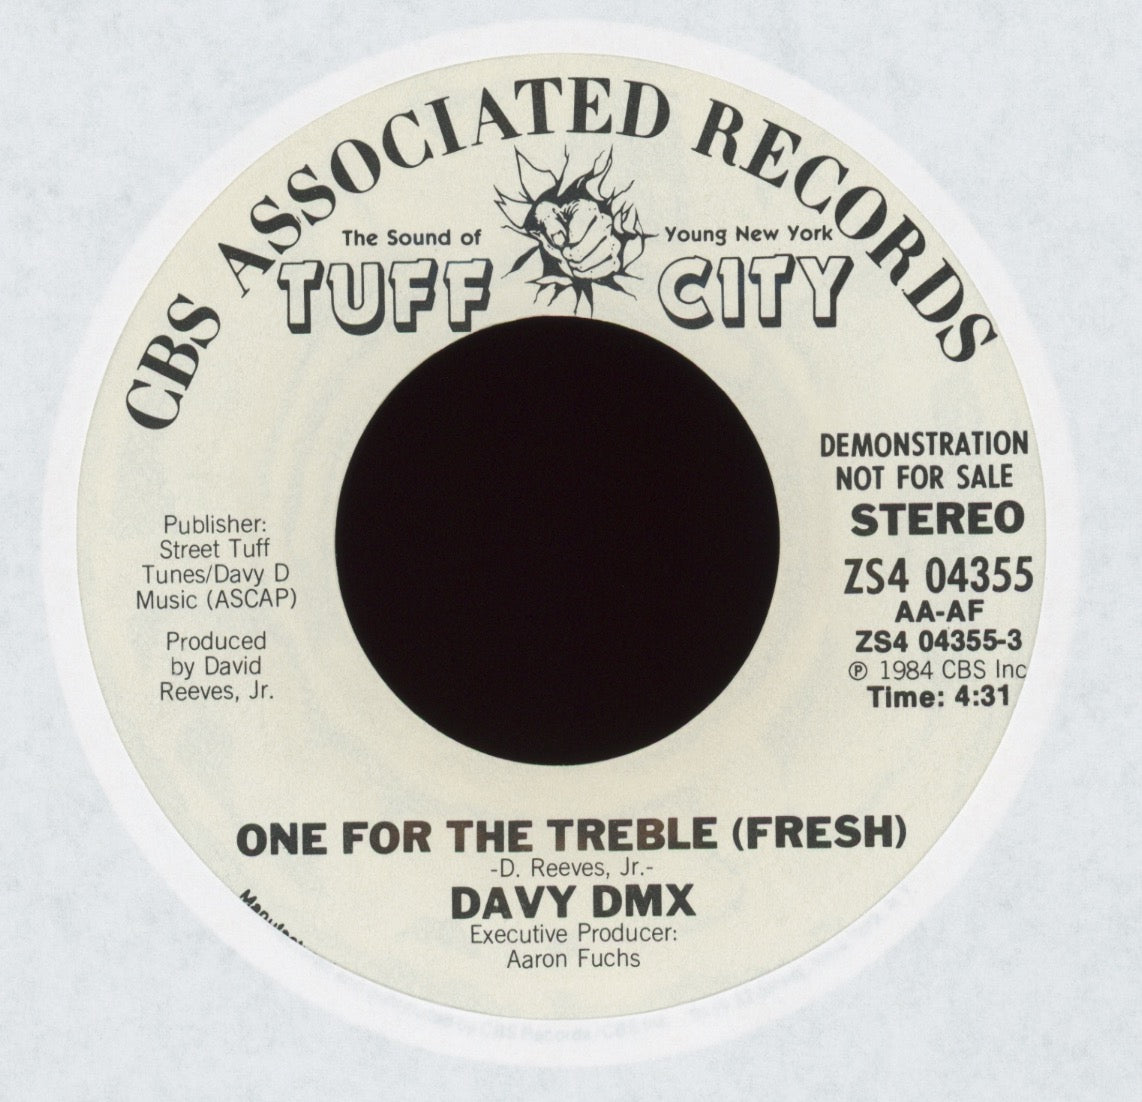 Davy DMX - One For The Treble (Fresh) on Tuff City